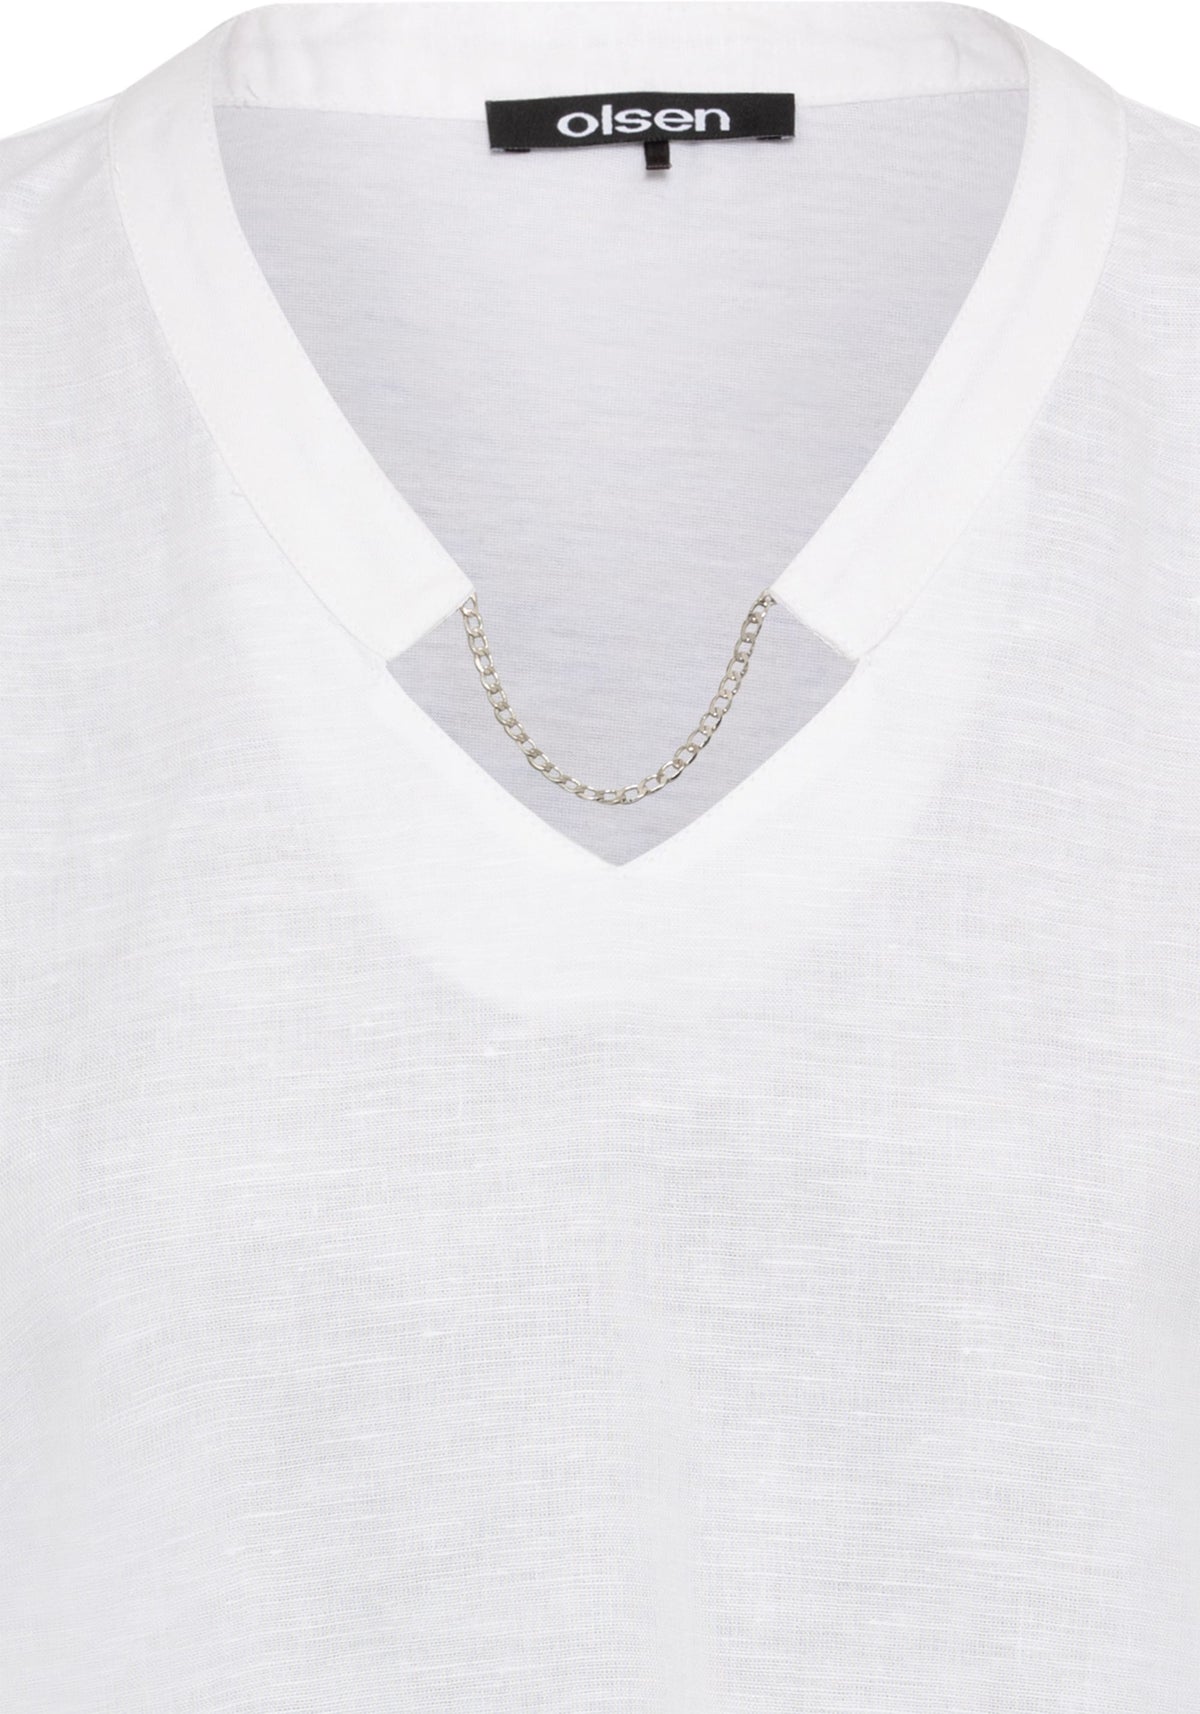 Cotton Linen Short Sleeve Neck Chain Detail Tunic Top